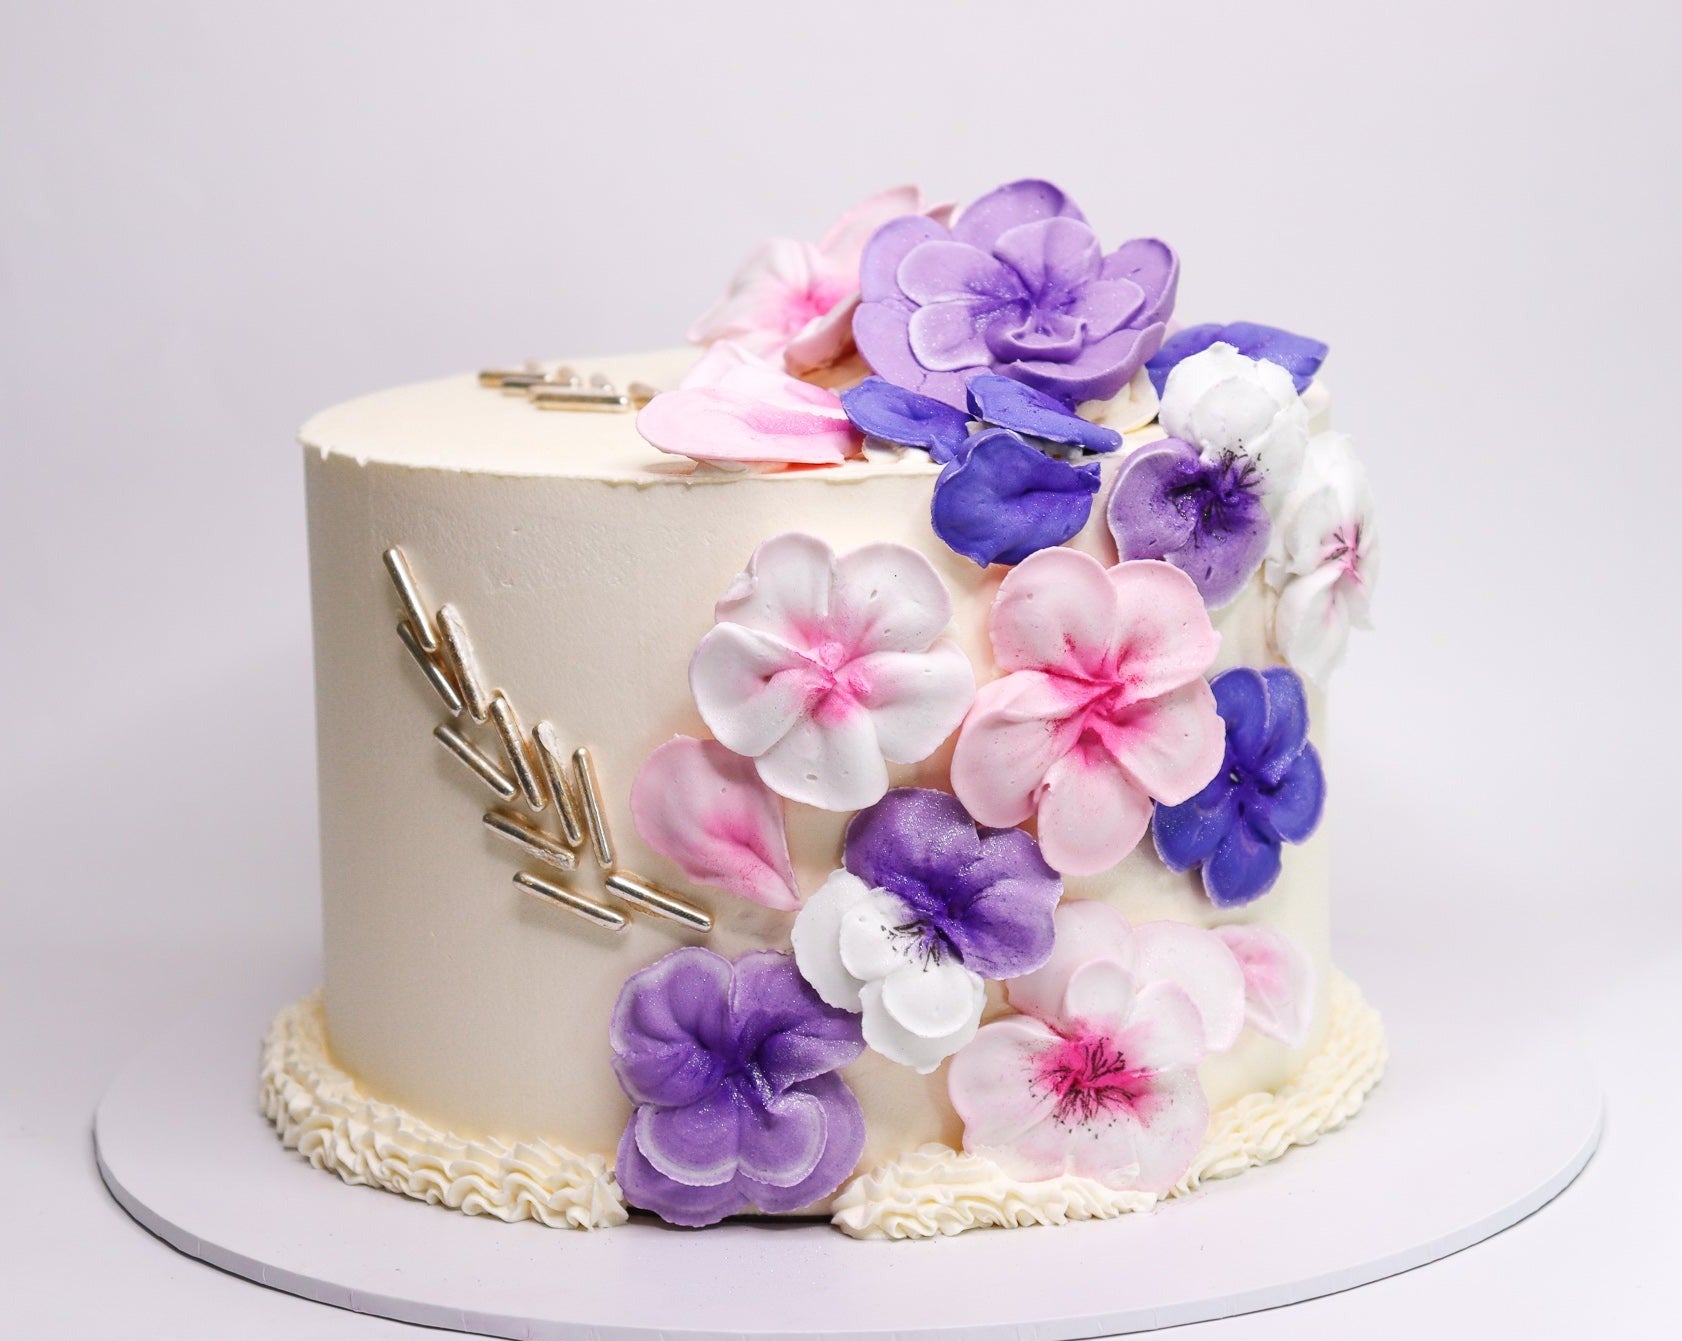 Buttercream Flower Cake: Step-By-Step Tutorial & Recipe